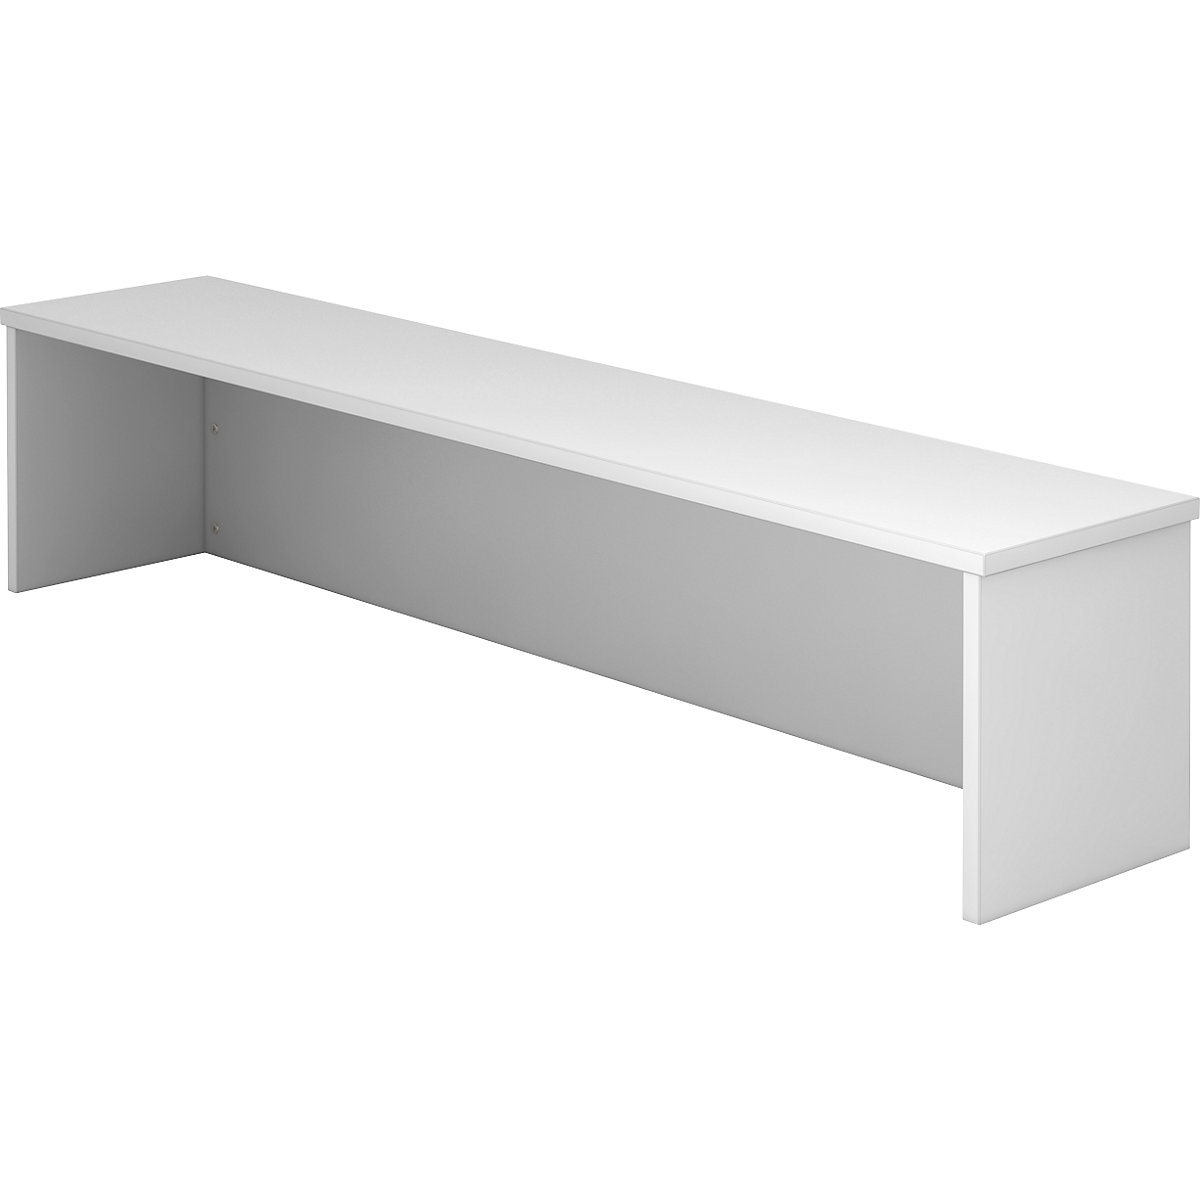 Counter extension VIOLA, for desk, 1600 mm wide, light grey